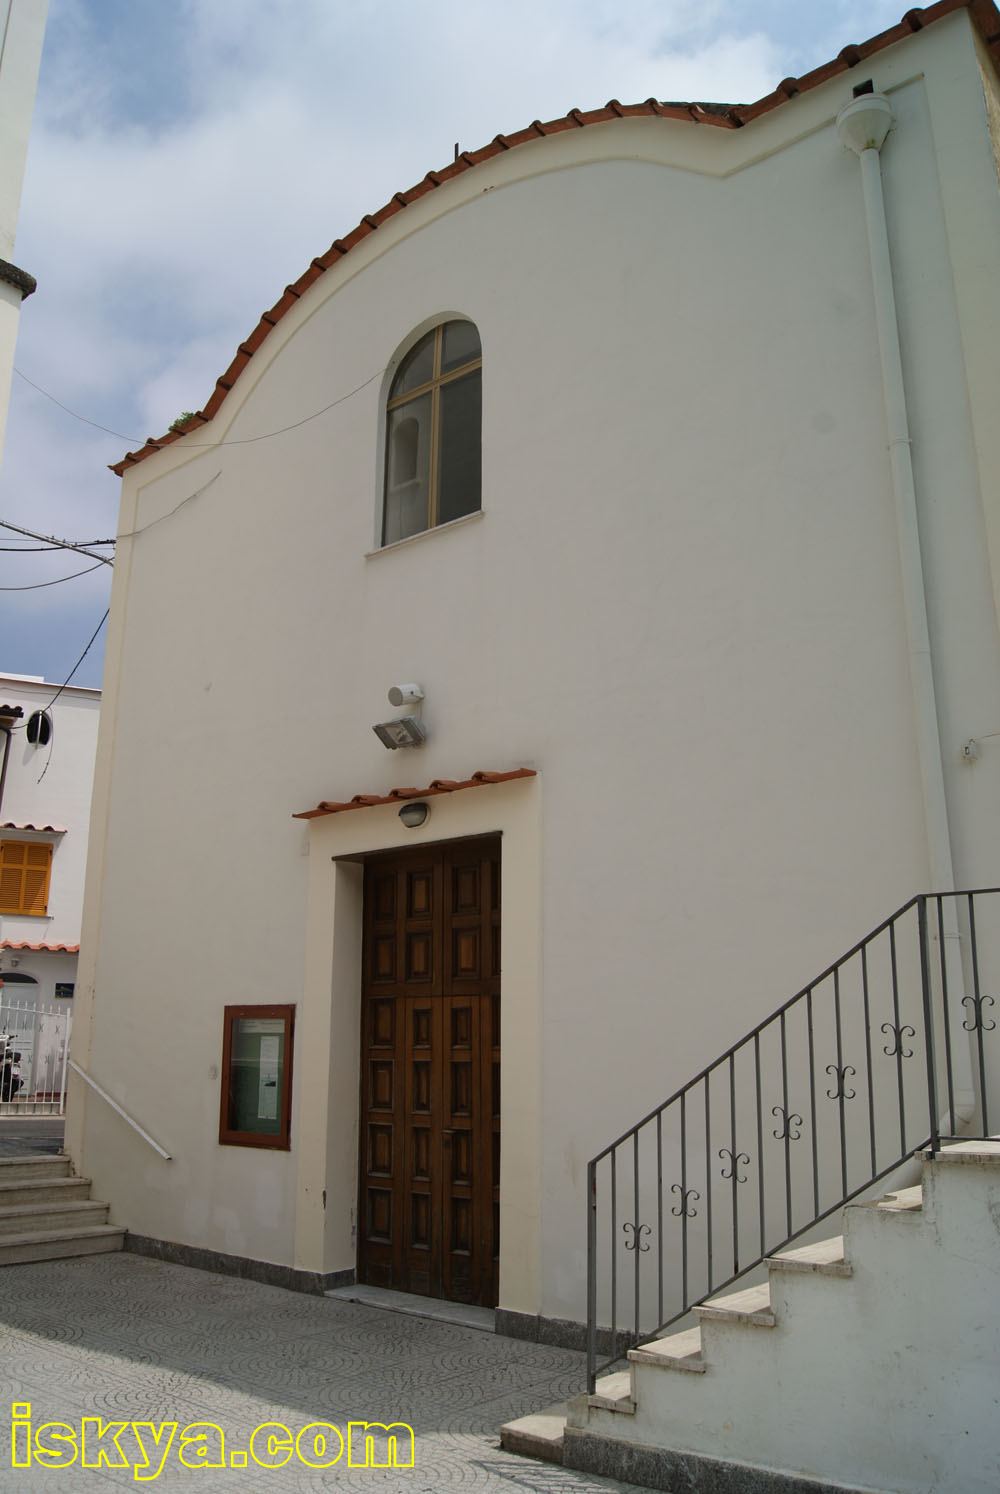 Chiesa di San Giuseppe e Sant'Anna (Barano)